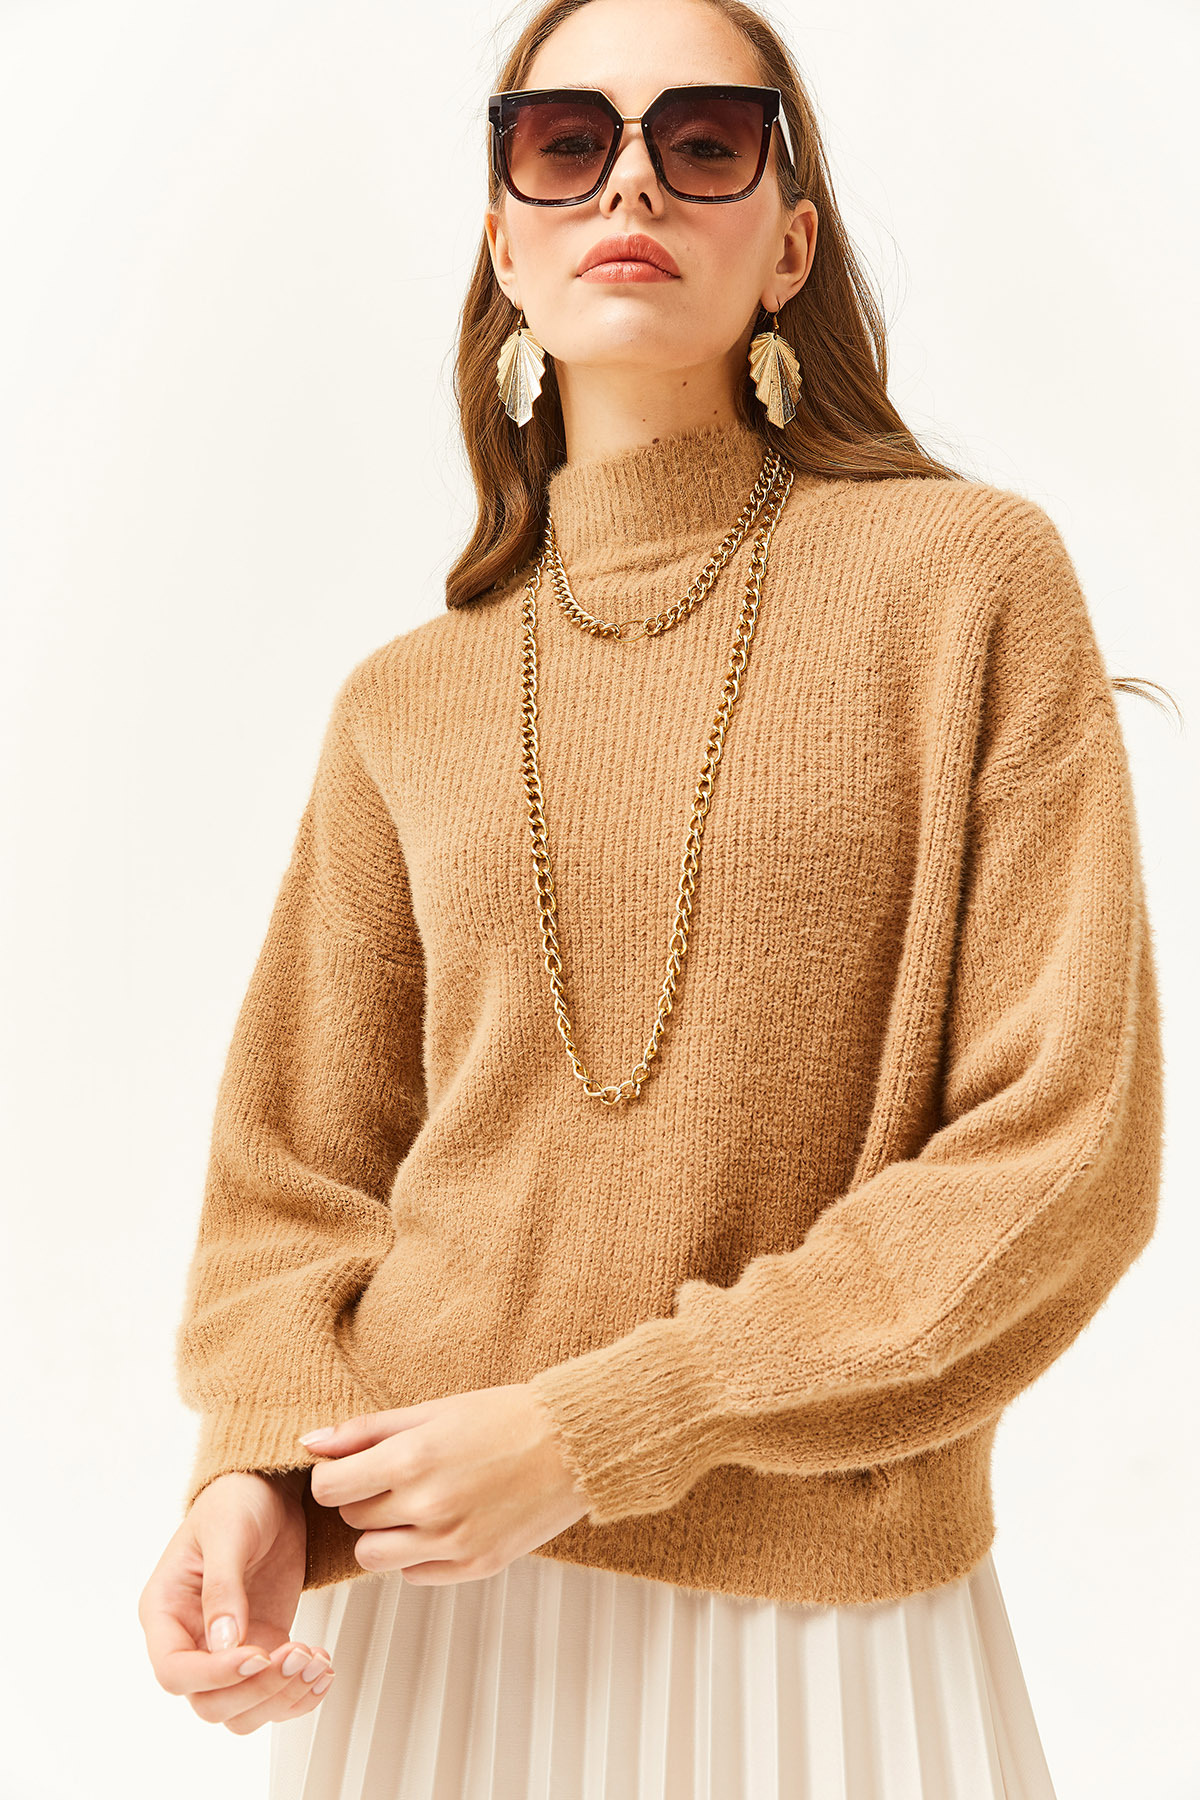 Levně Olalook Women's Biscuit Half Turtleneck Soft Textured Bearded Knitwear Sweater